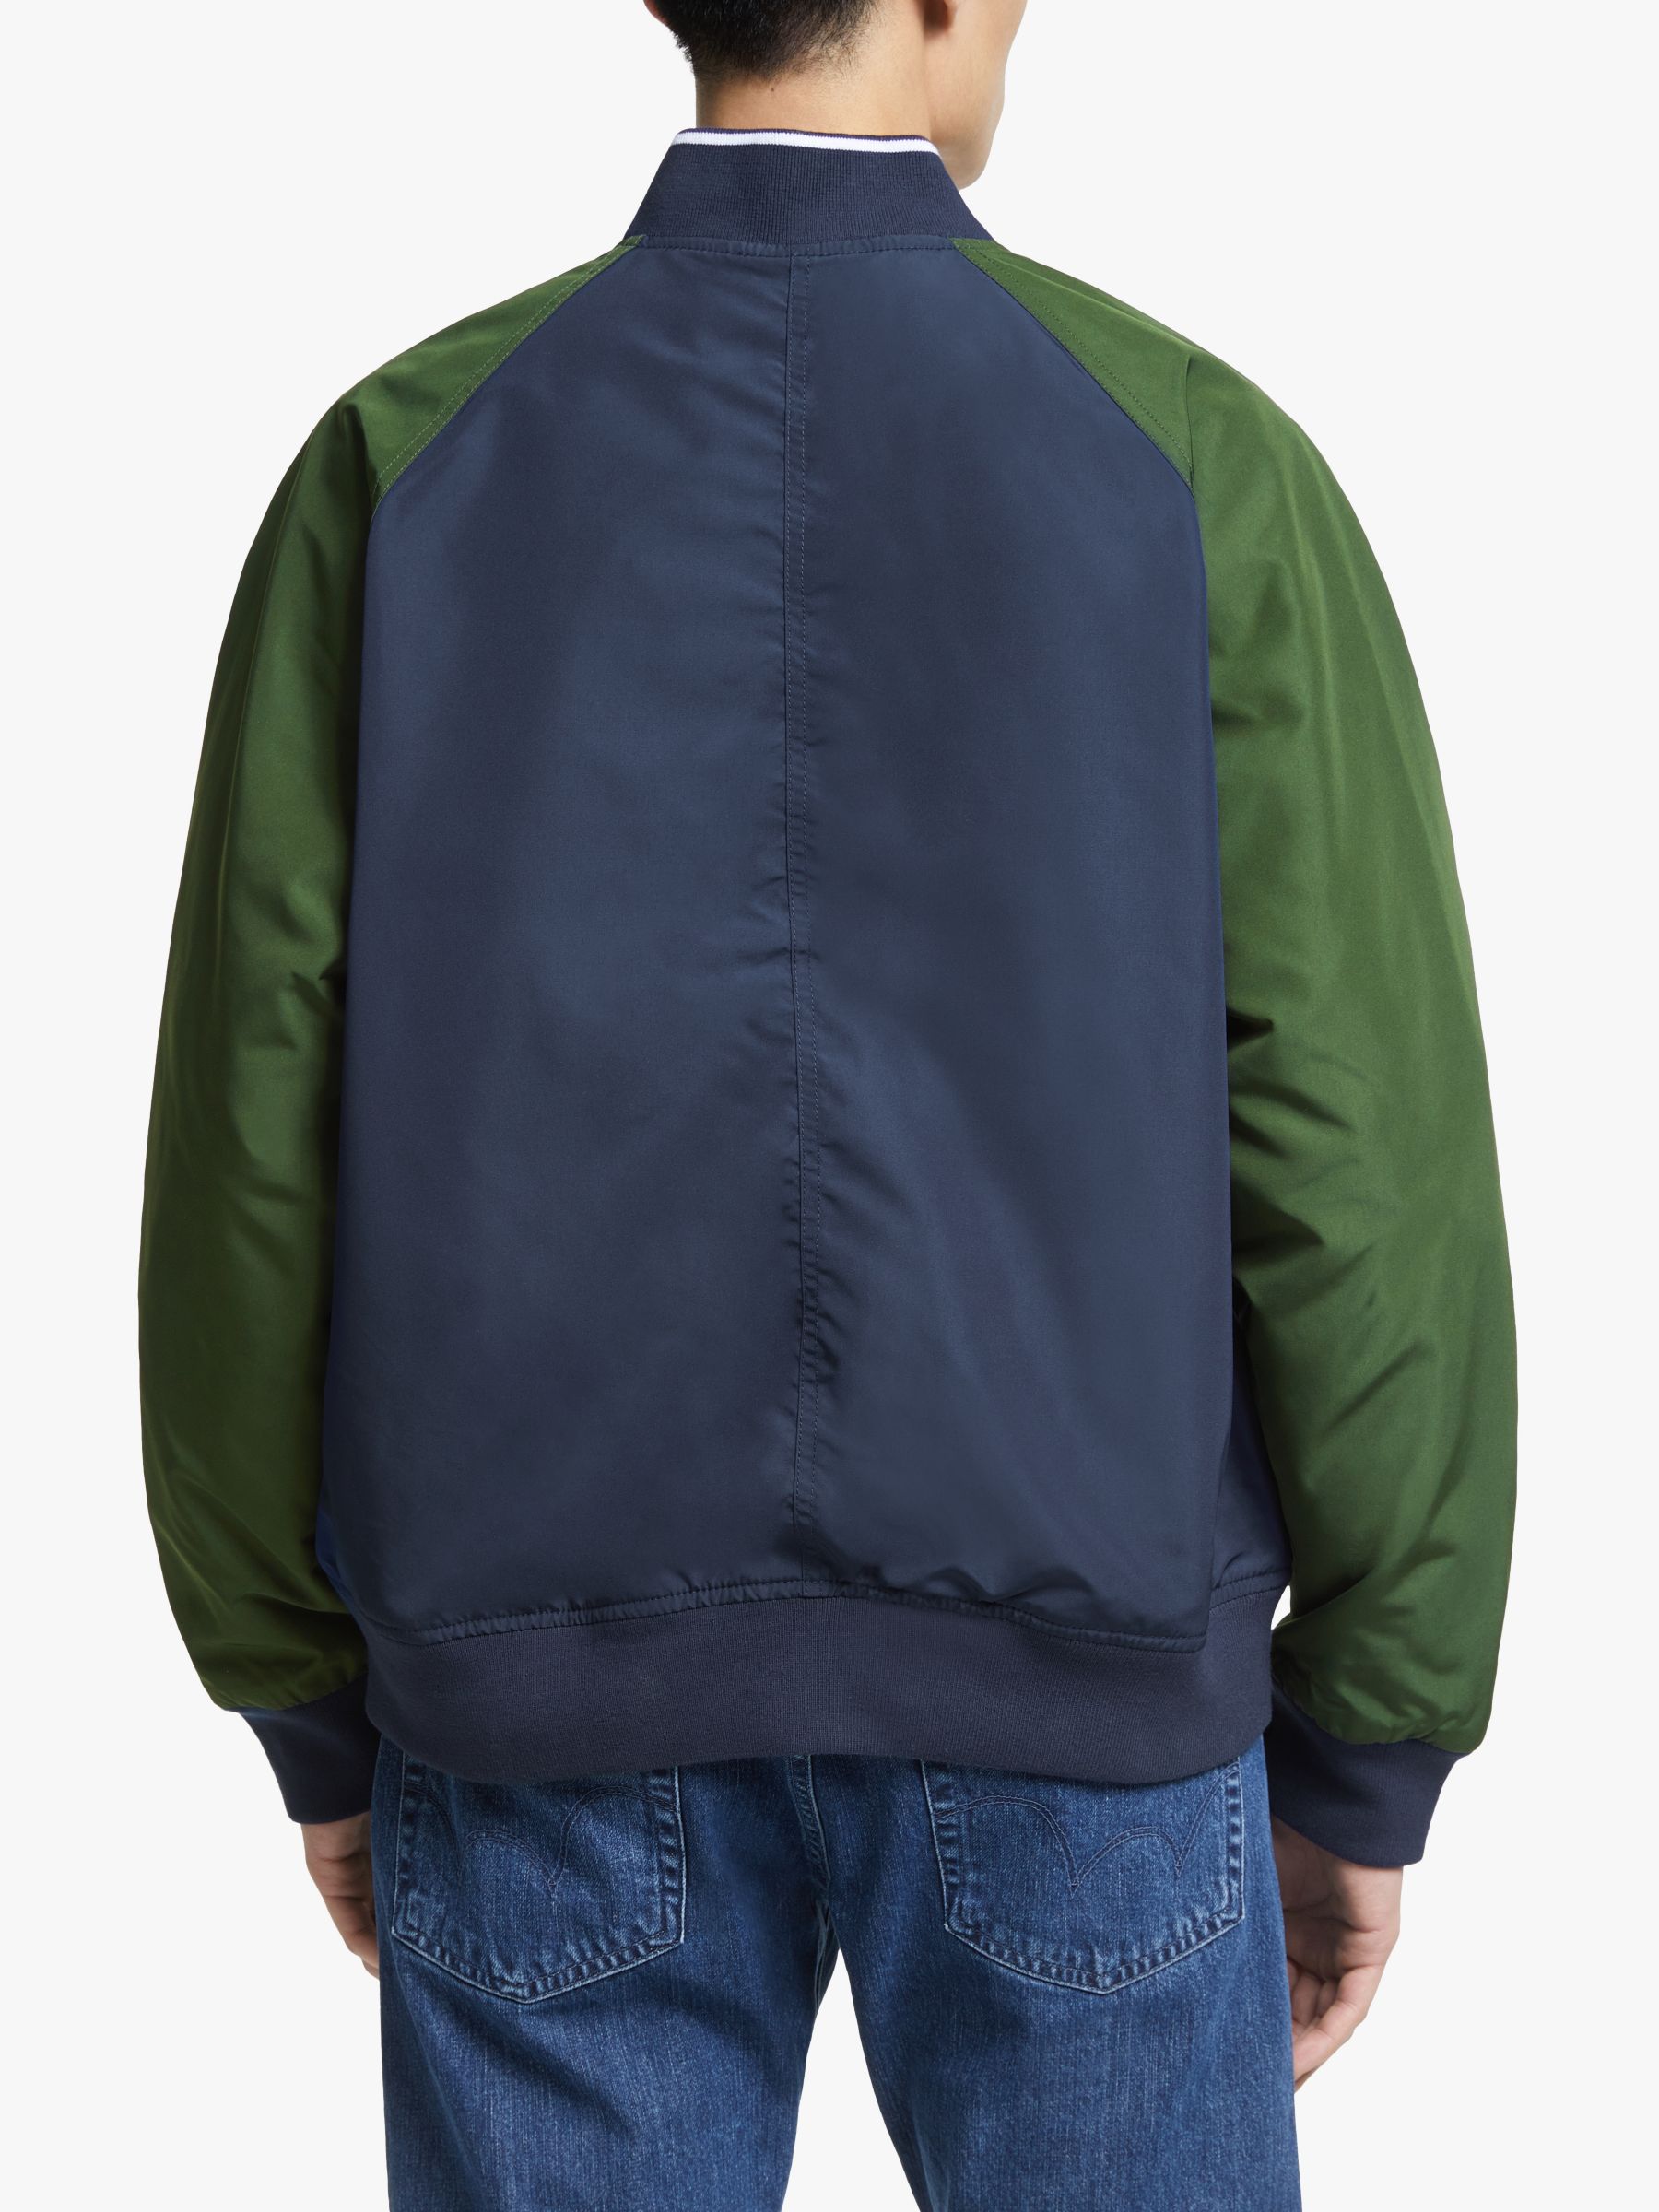 lacoste bomber jacket green